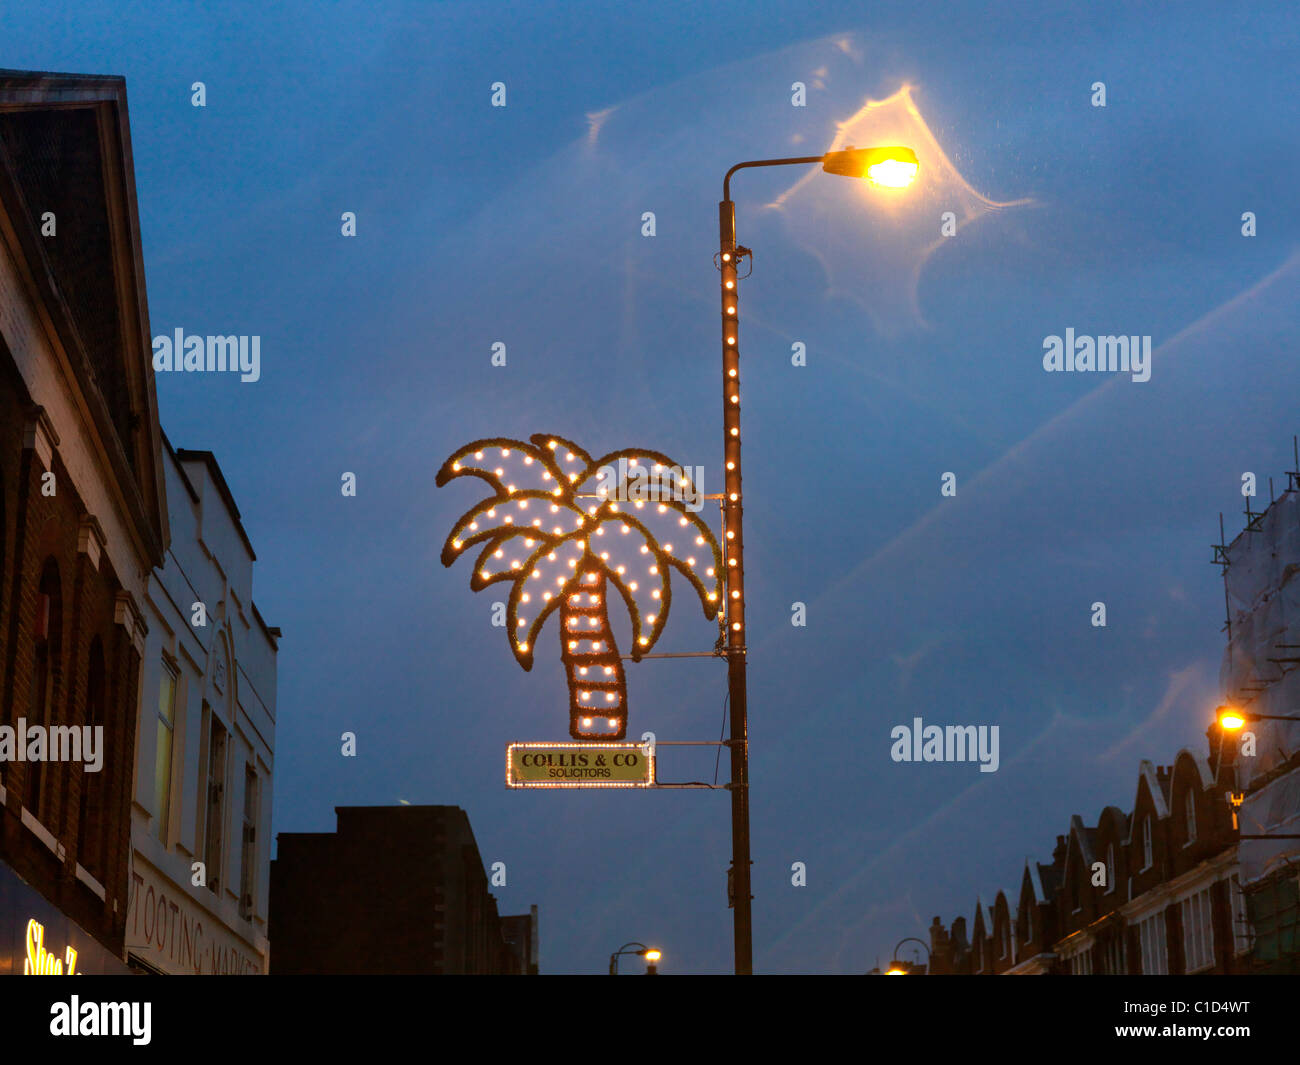 Tooting London England Eid Lights On Lampost Stock Photo